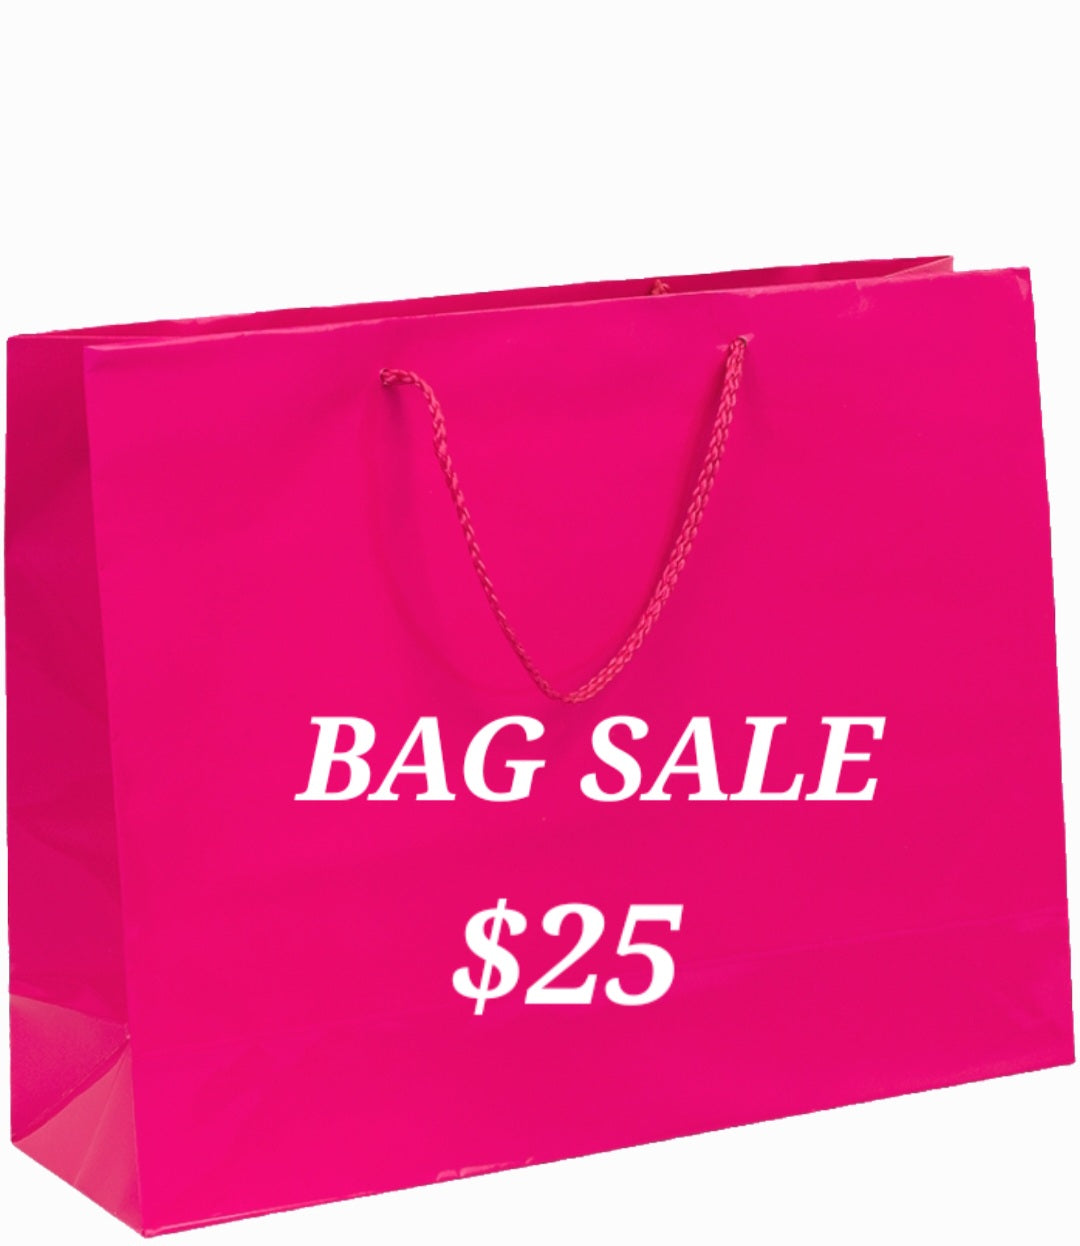 Bag Sale ($25)